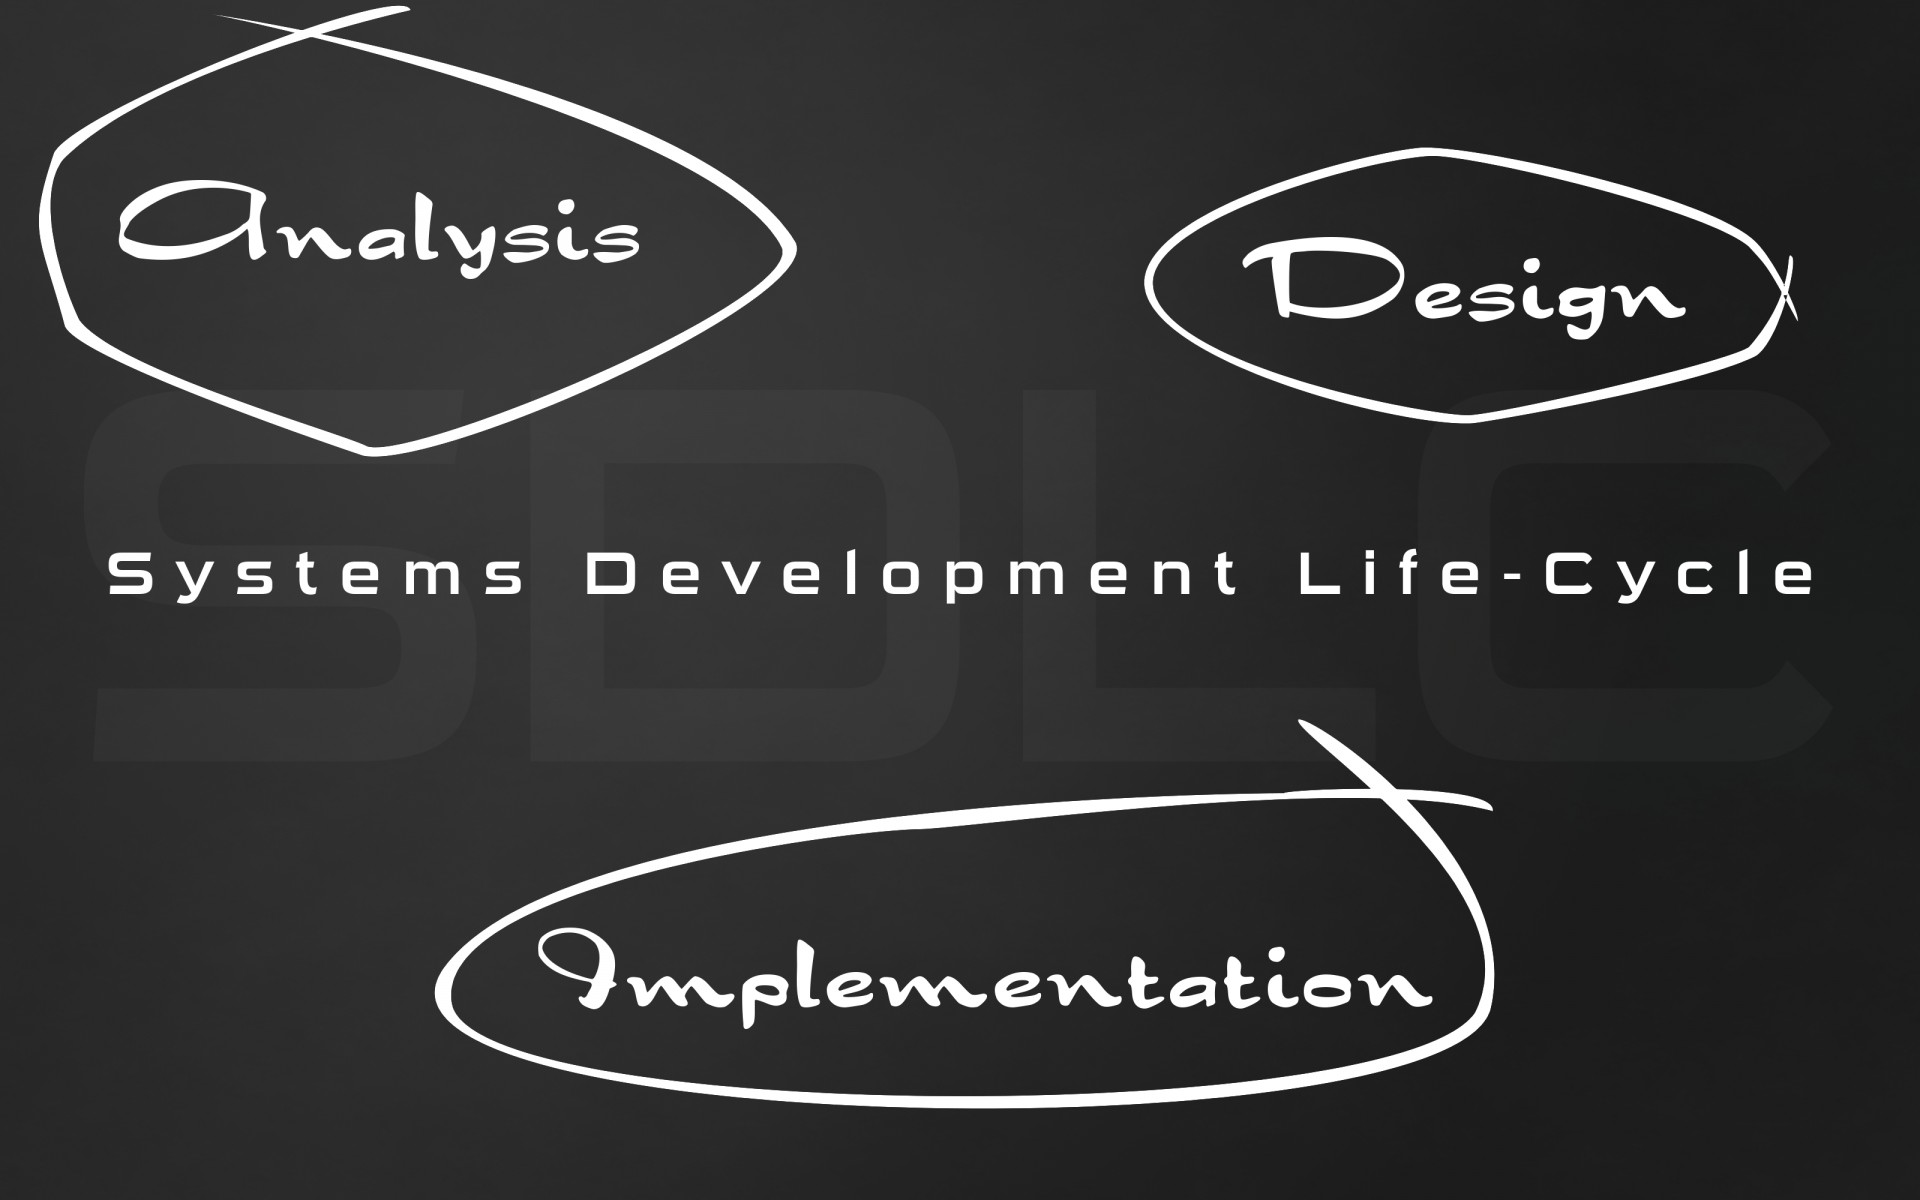 SDLC - Systems Development Life-Cycle. Analysis Design Implementation